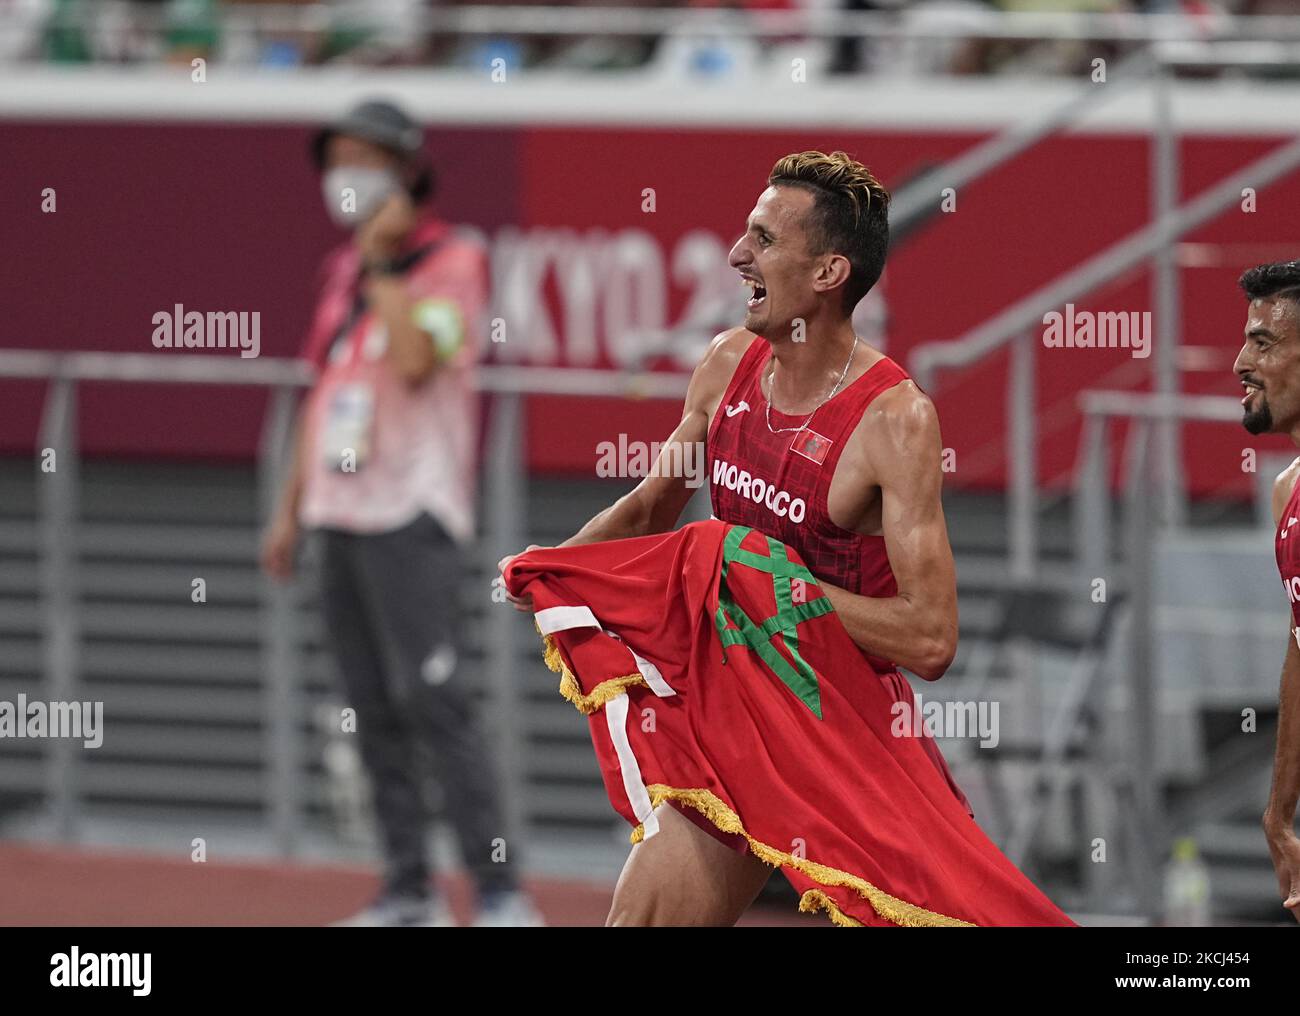 Soufiane El Bakkali from Marocco winning 3000 meter steeplechase for men at the Tokyo Olympics, Tokyo Olympic stadium, Tokyo, Japan on August 2, 2021. (Photo by Ulrik Pedersen/NurPhoto) Stock Photo